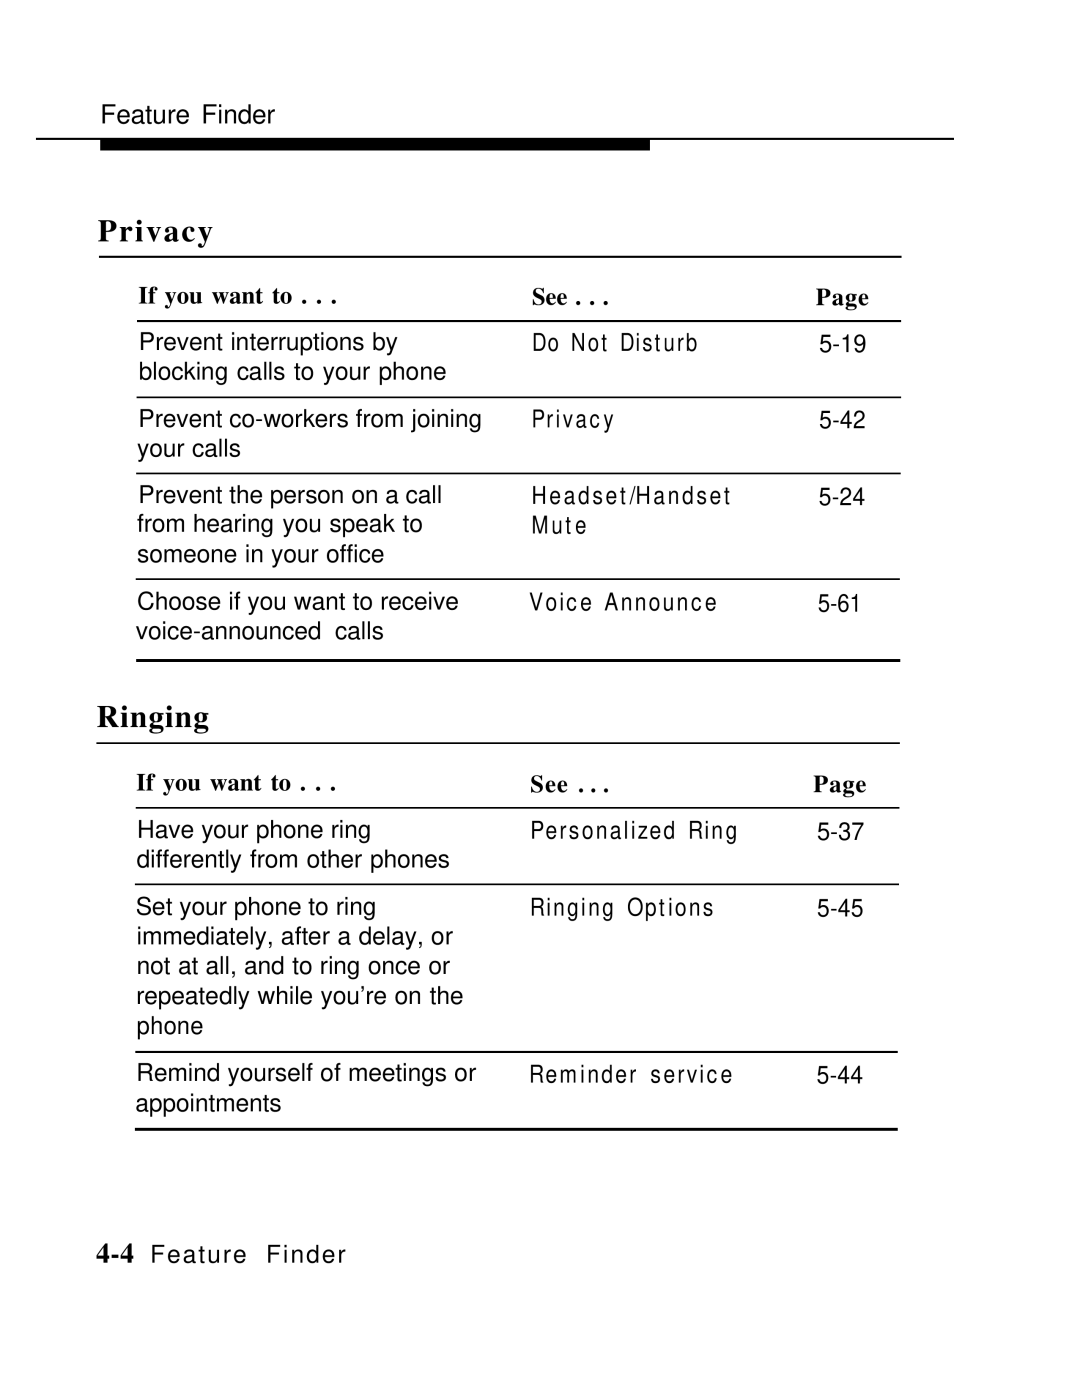 AT&T MLX-10 manual Privacy, Ringing 